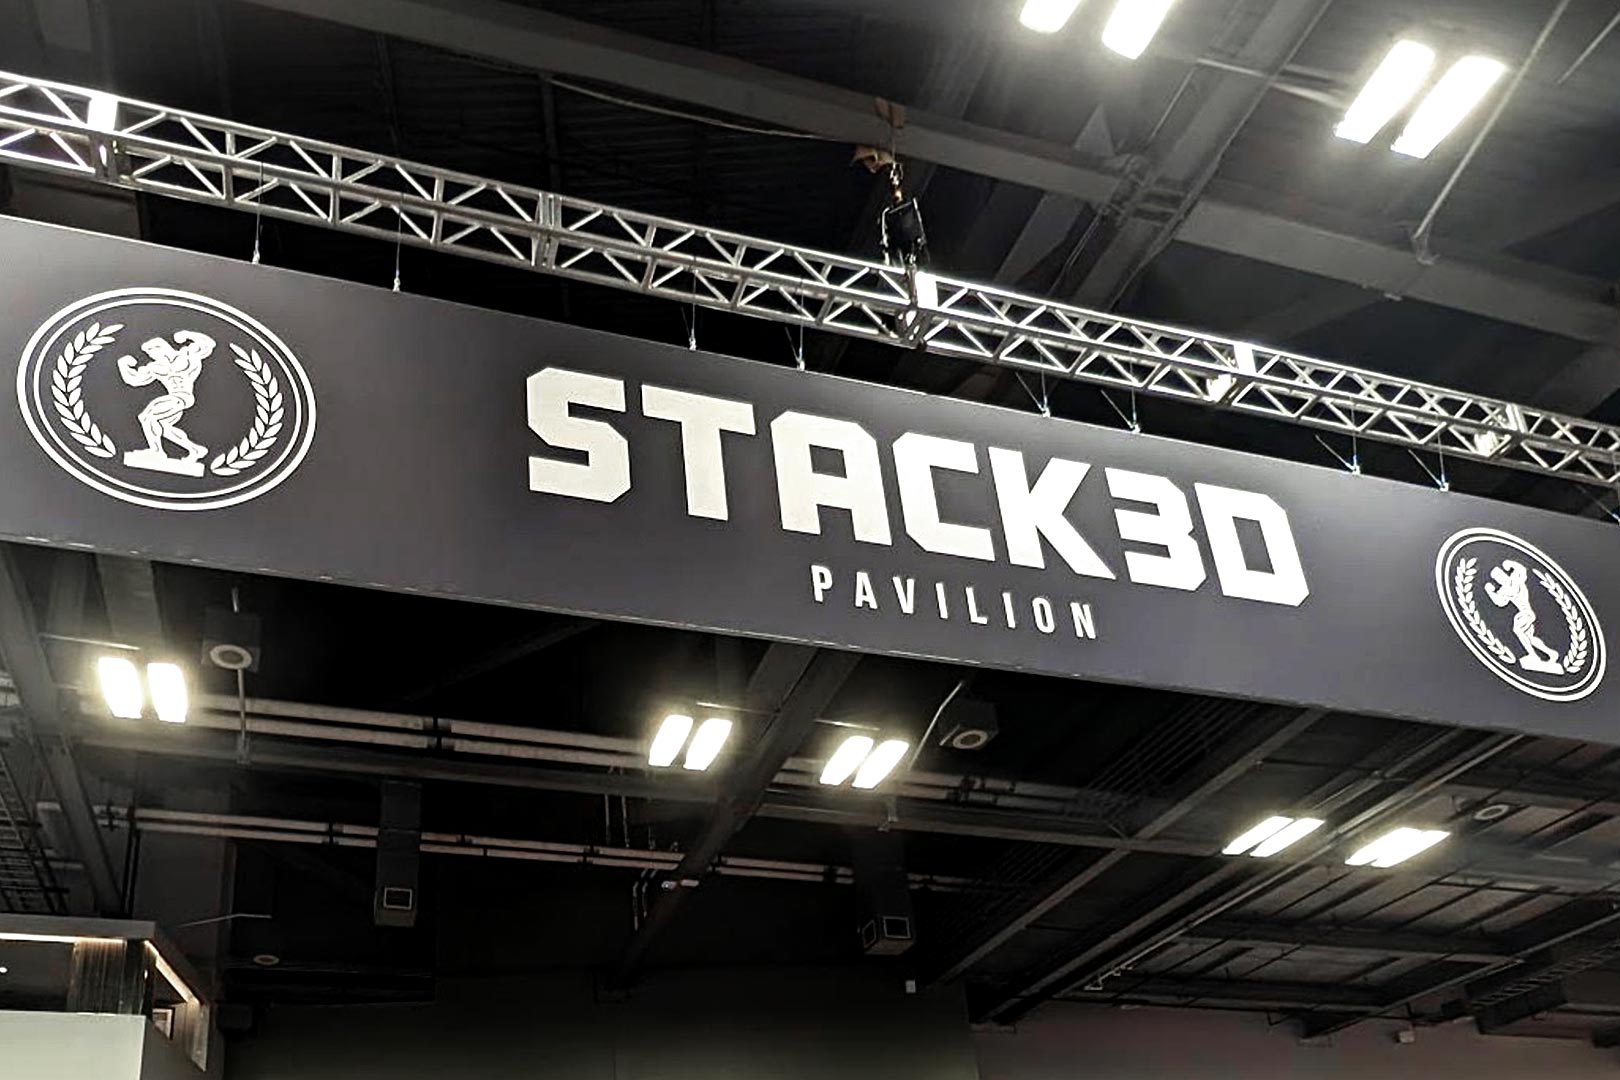 Stack3d Pavilion is open